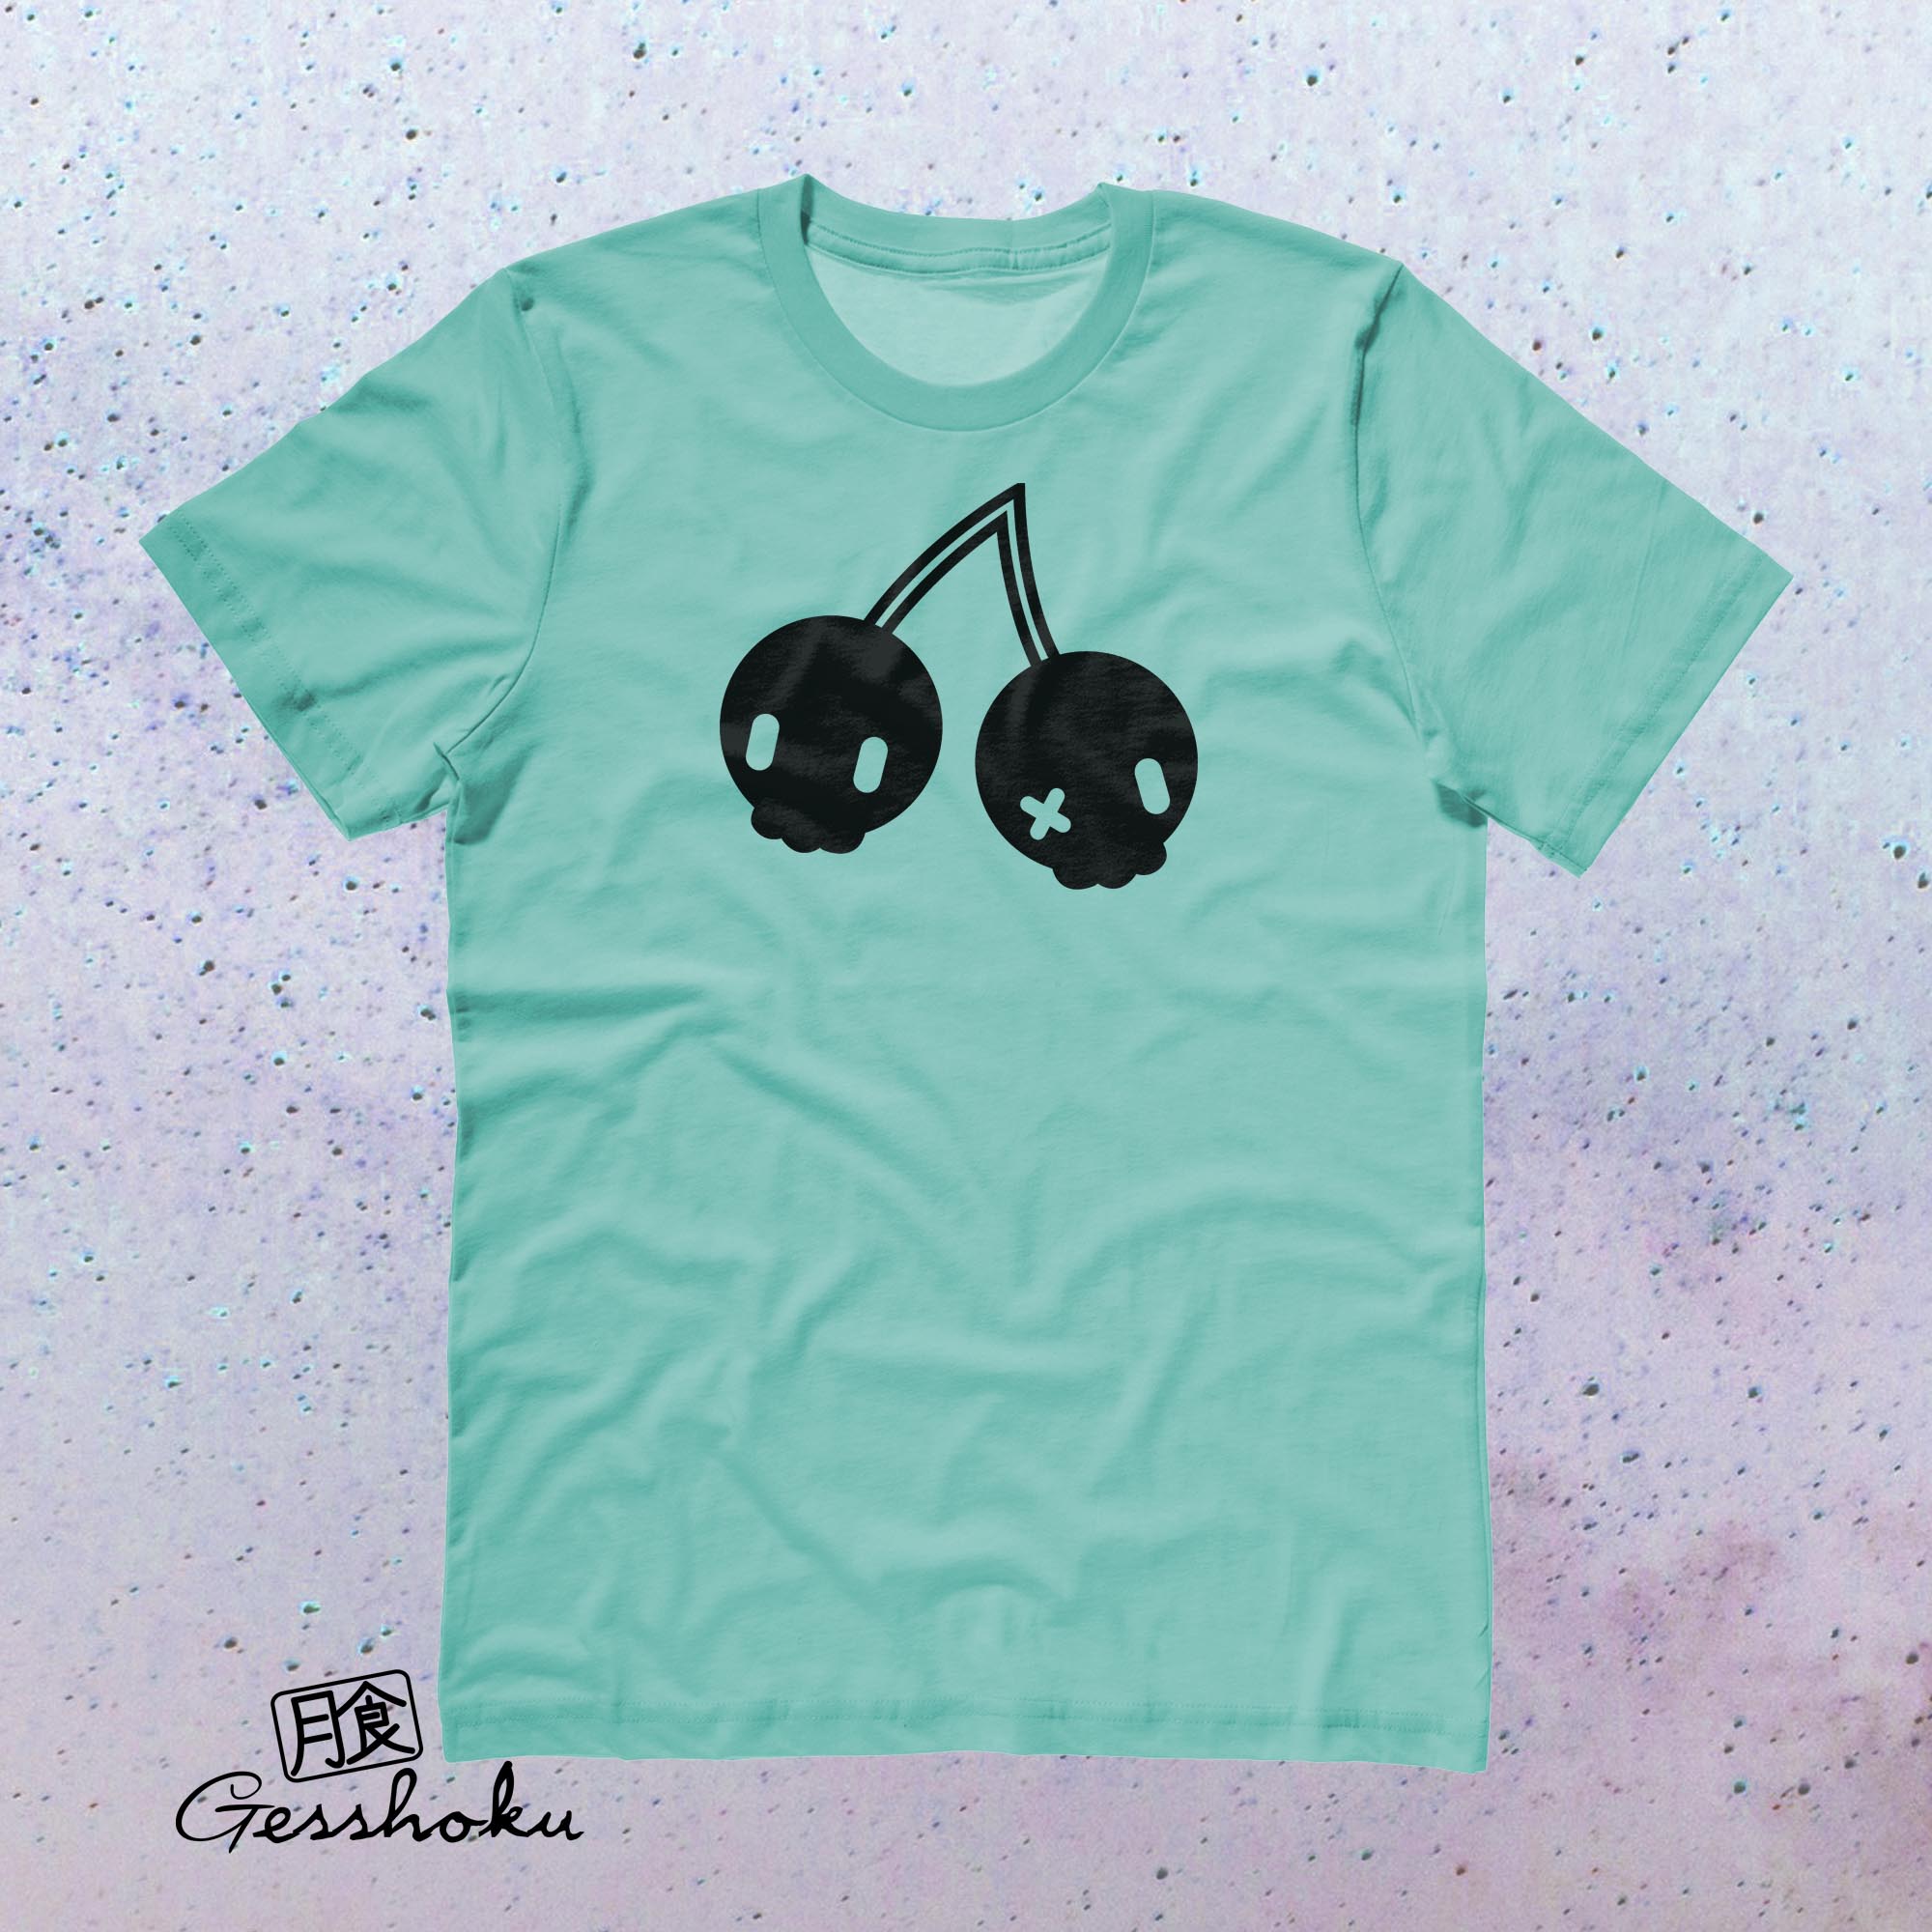 Cherry Skulls T-shirt by Dokkirii - Teal